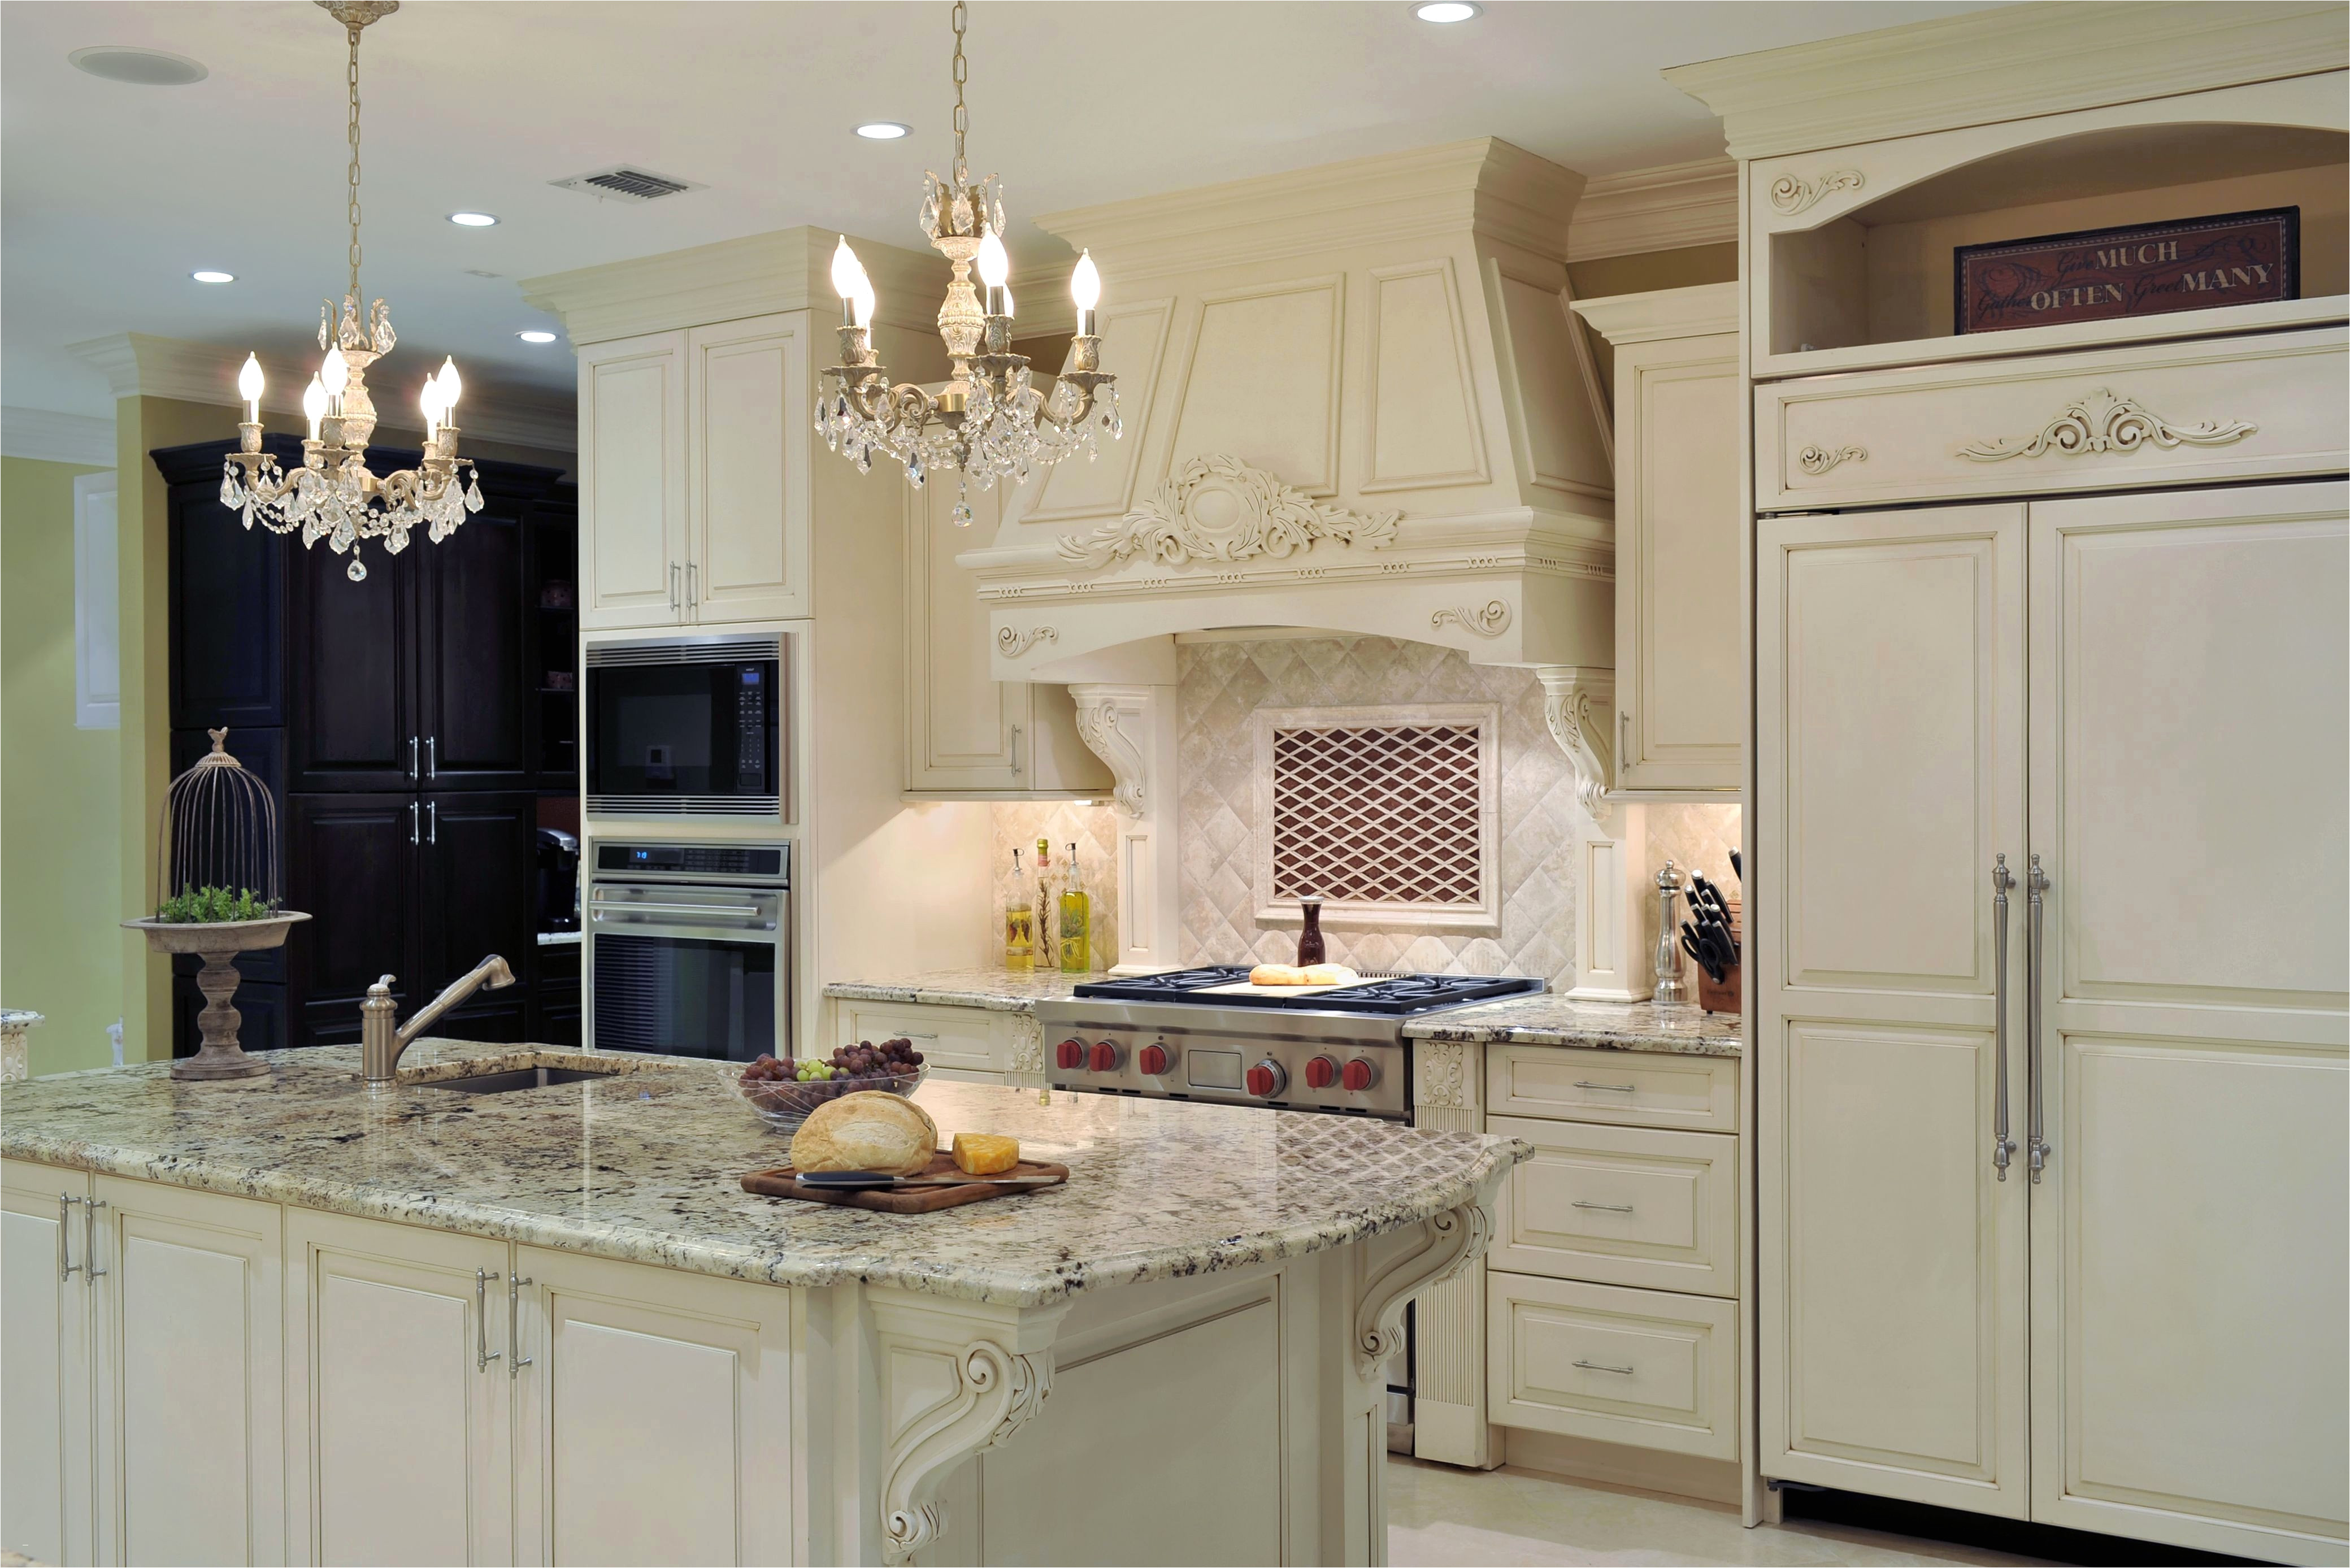 luxury hampton bay cabinet door replacement kitchen cabinet reviews by manufacturer inspirational hampton bay